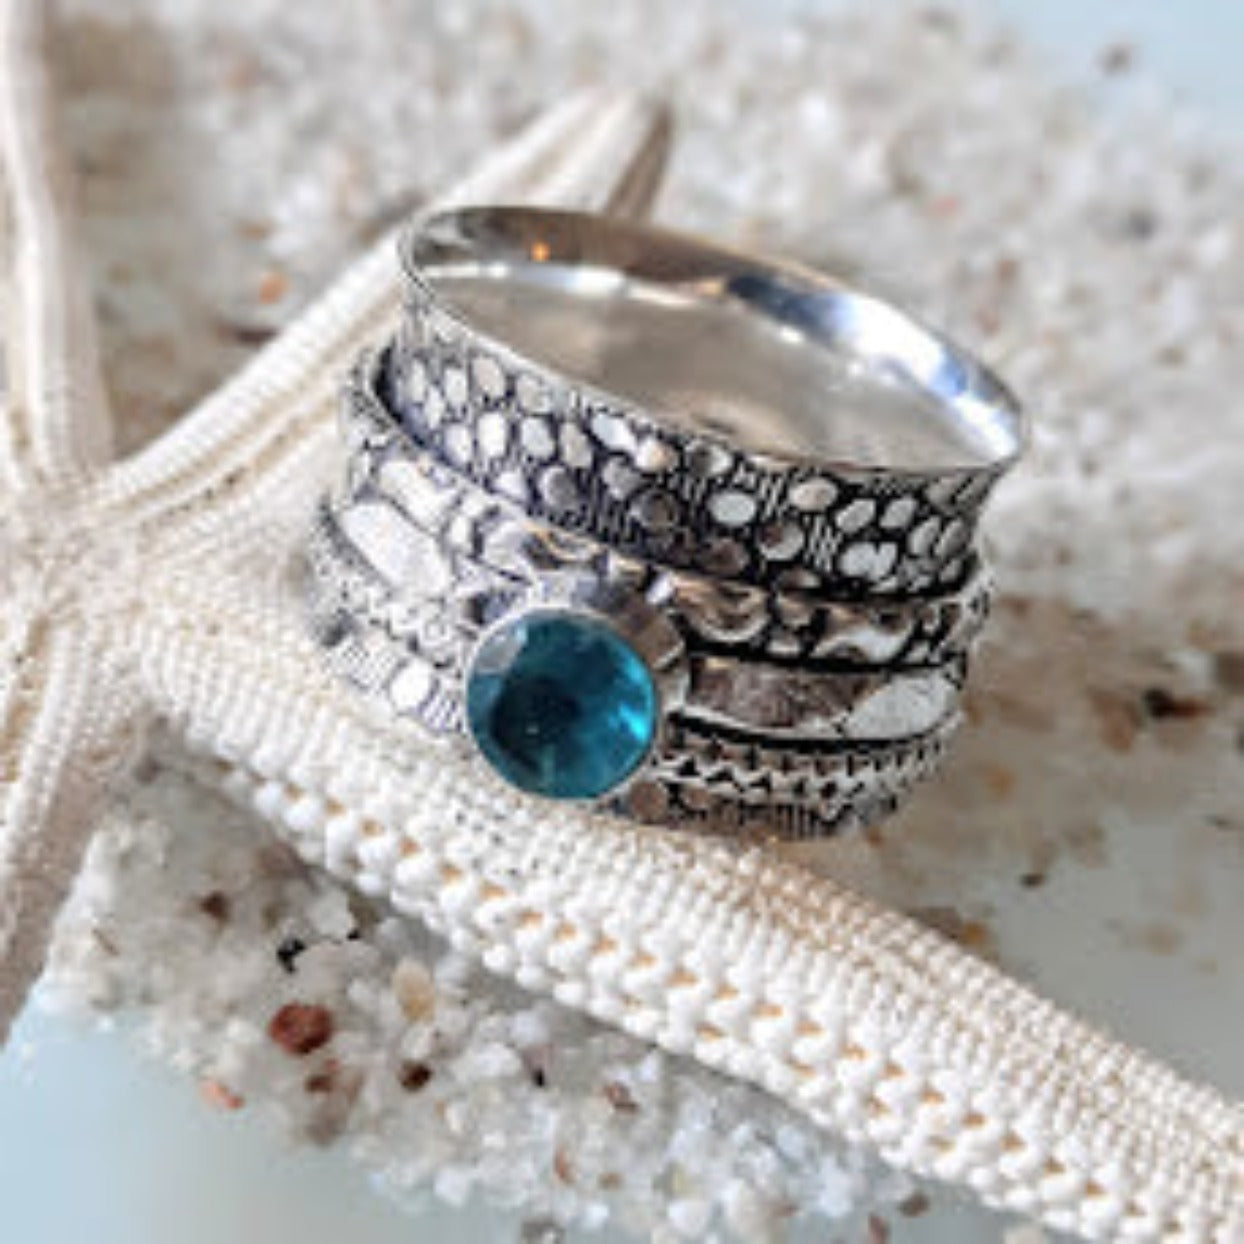 TRUE LOVE  - BLUE TOPAZ 925 SPINNER RING - Premium Rings from www.beachboho.com.au - Just $85! Shop now at www.beachboho.com.au